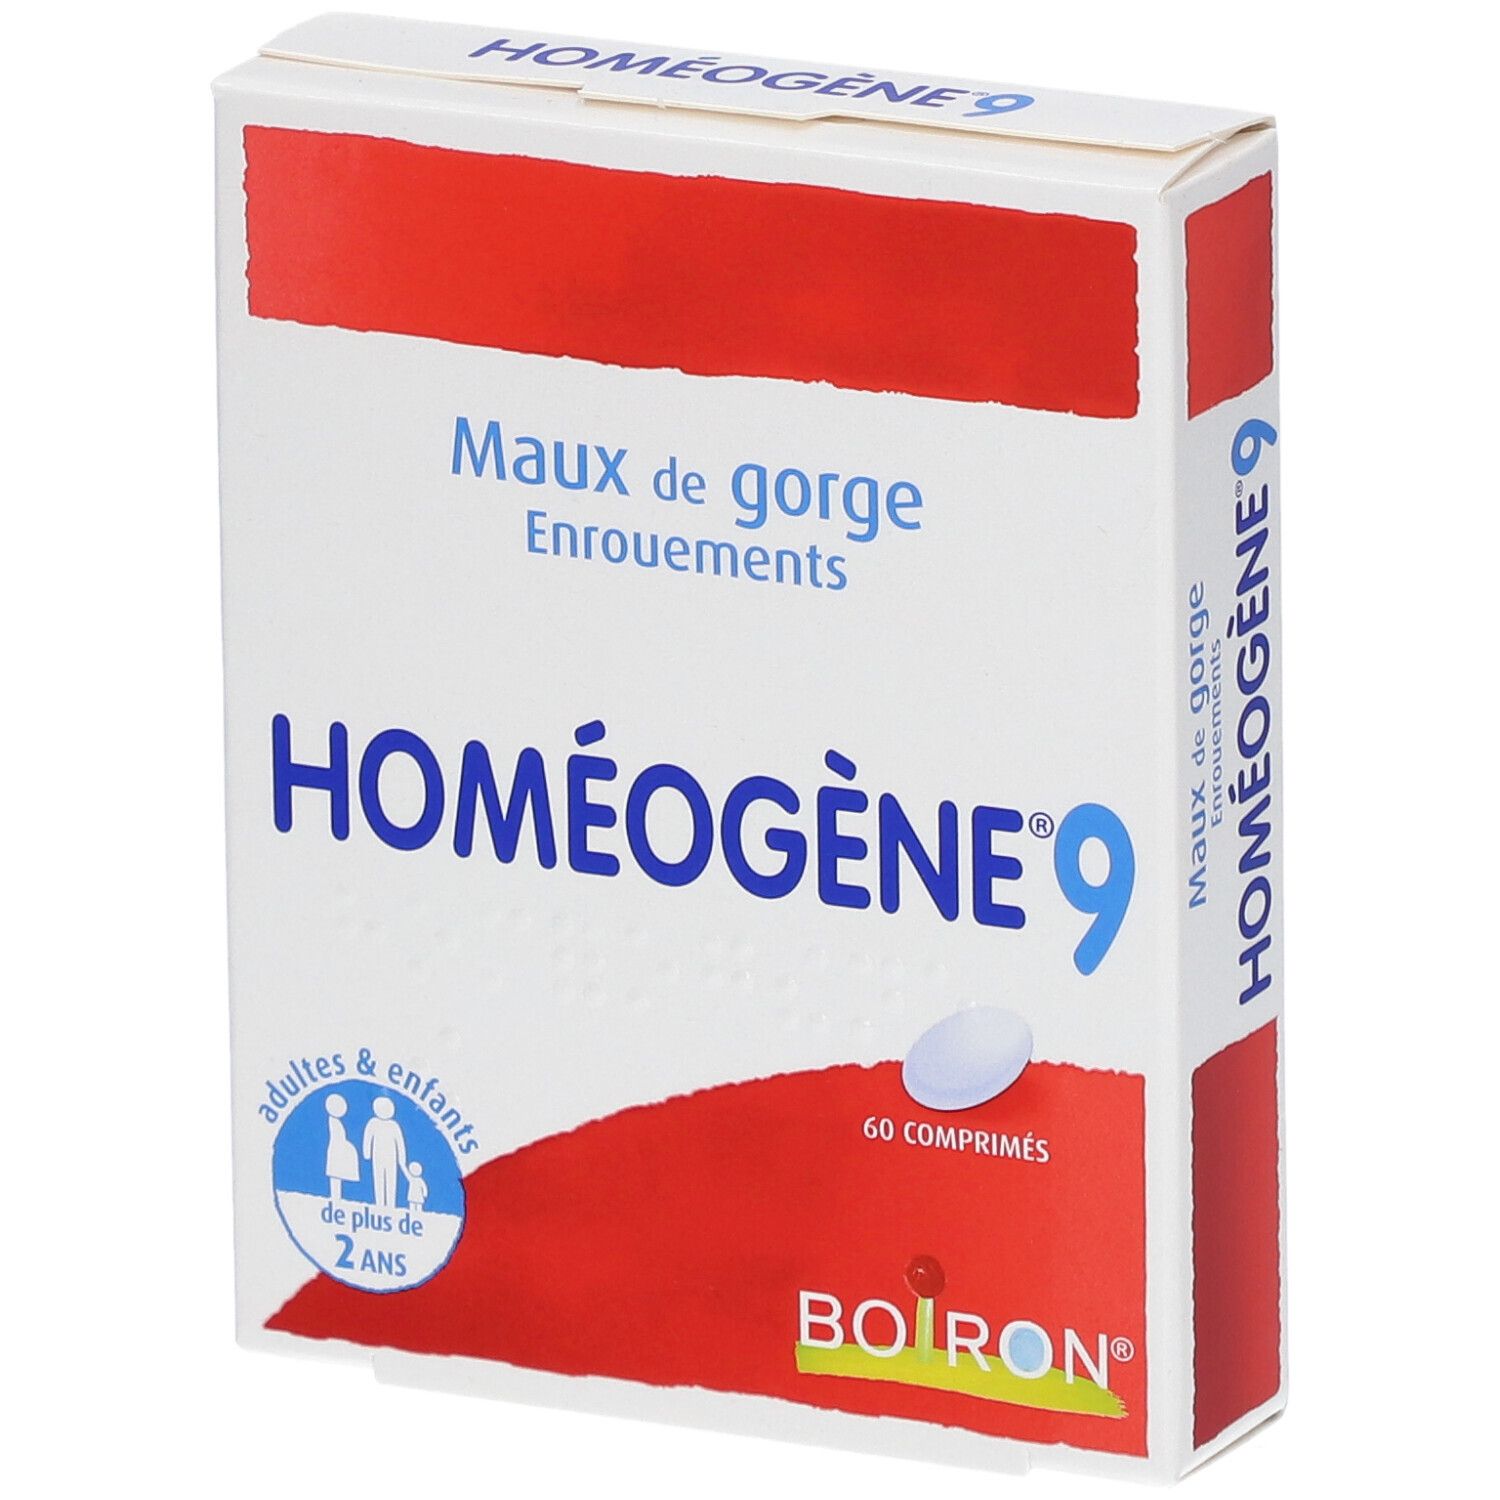 Boiron Homéogène® 9